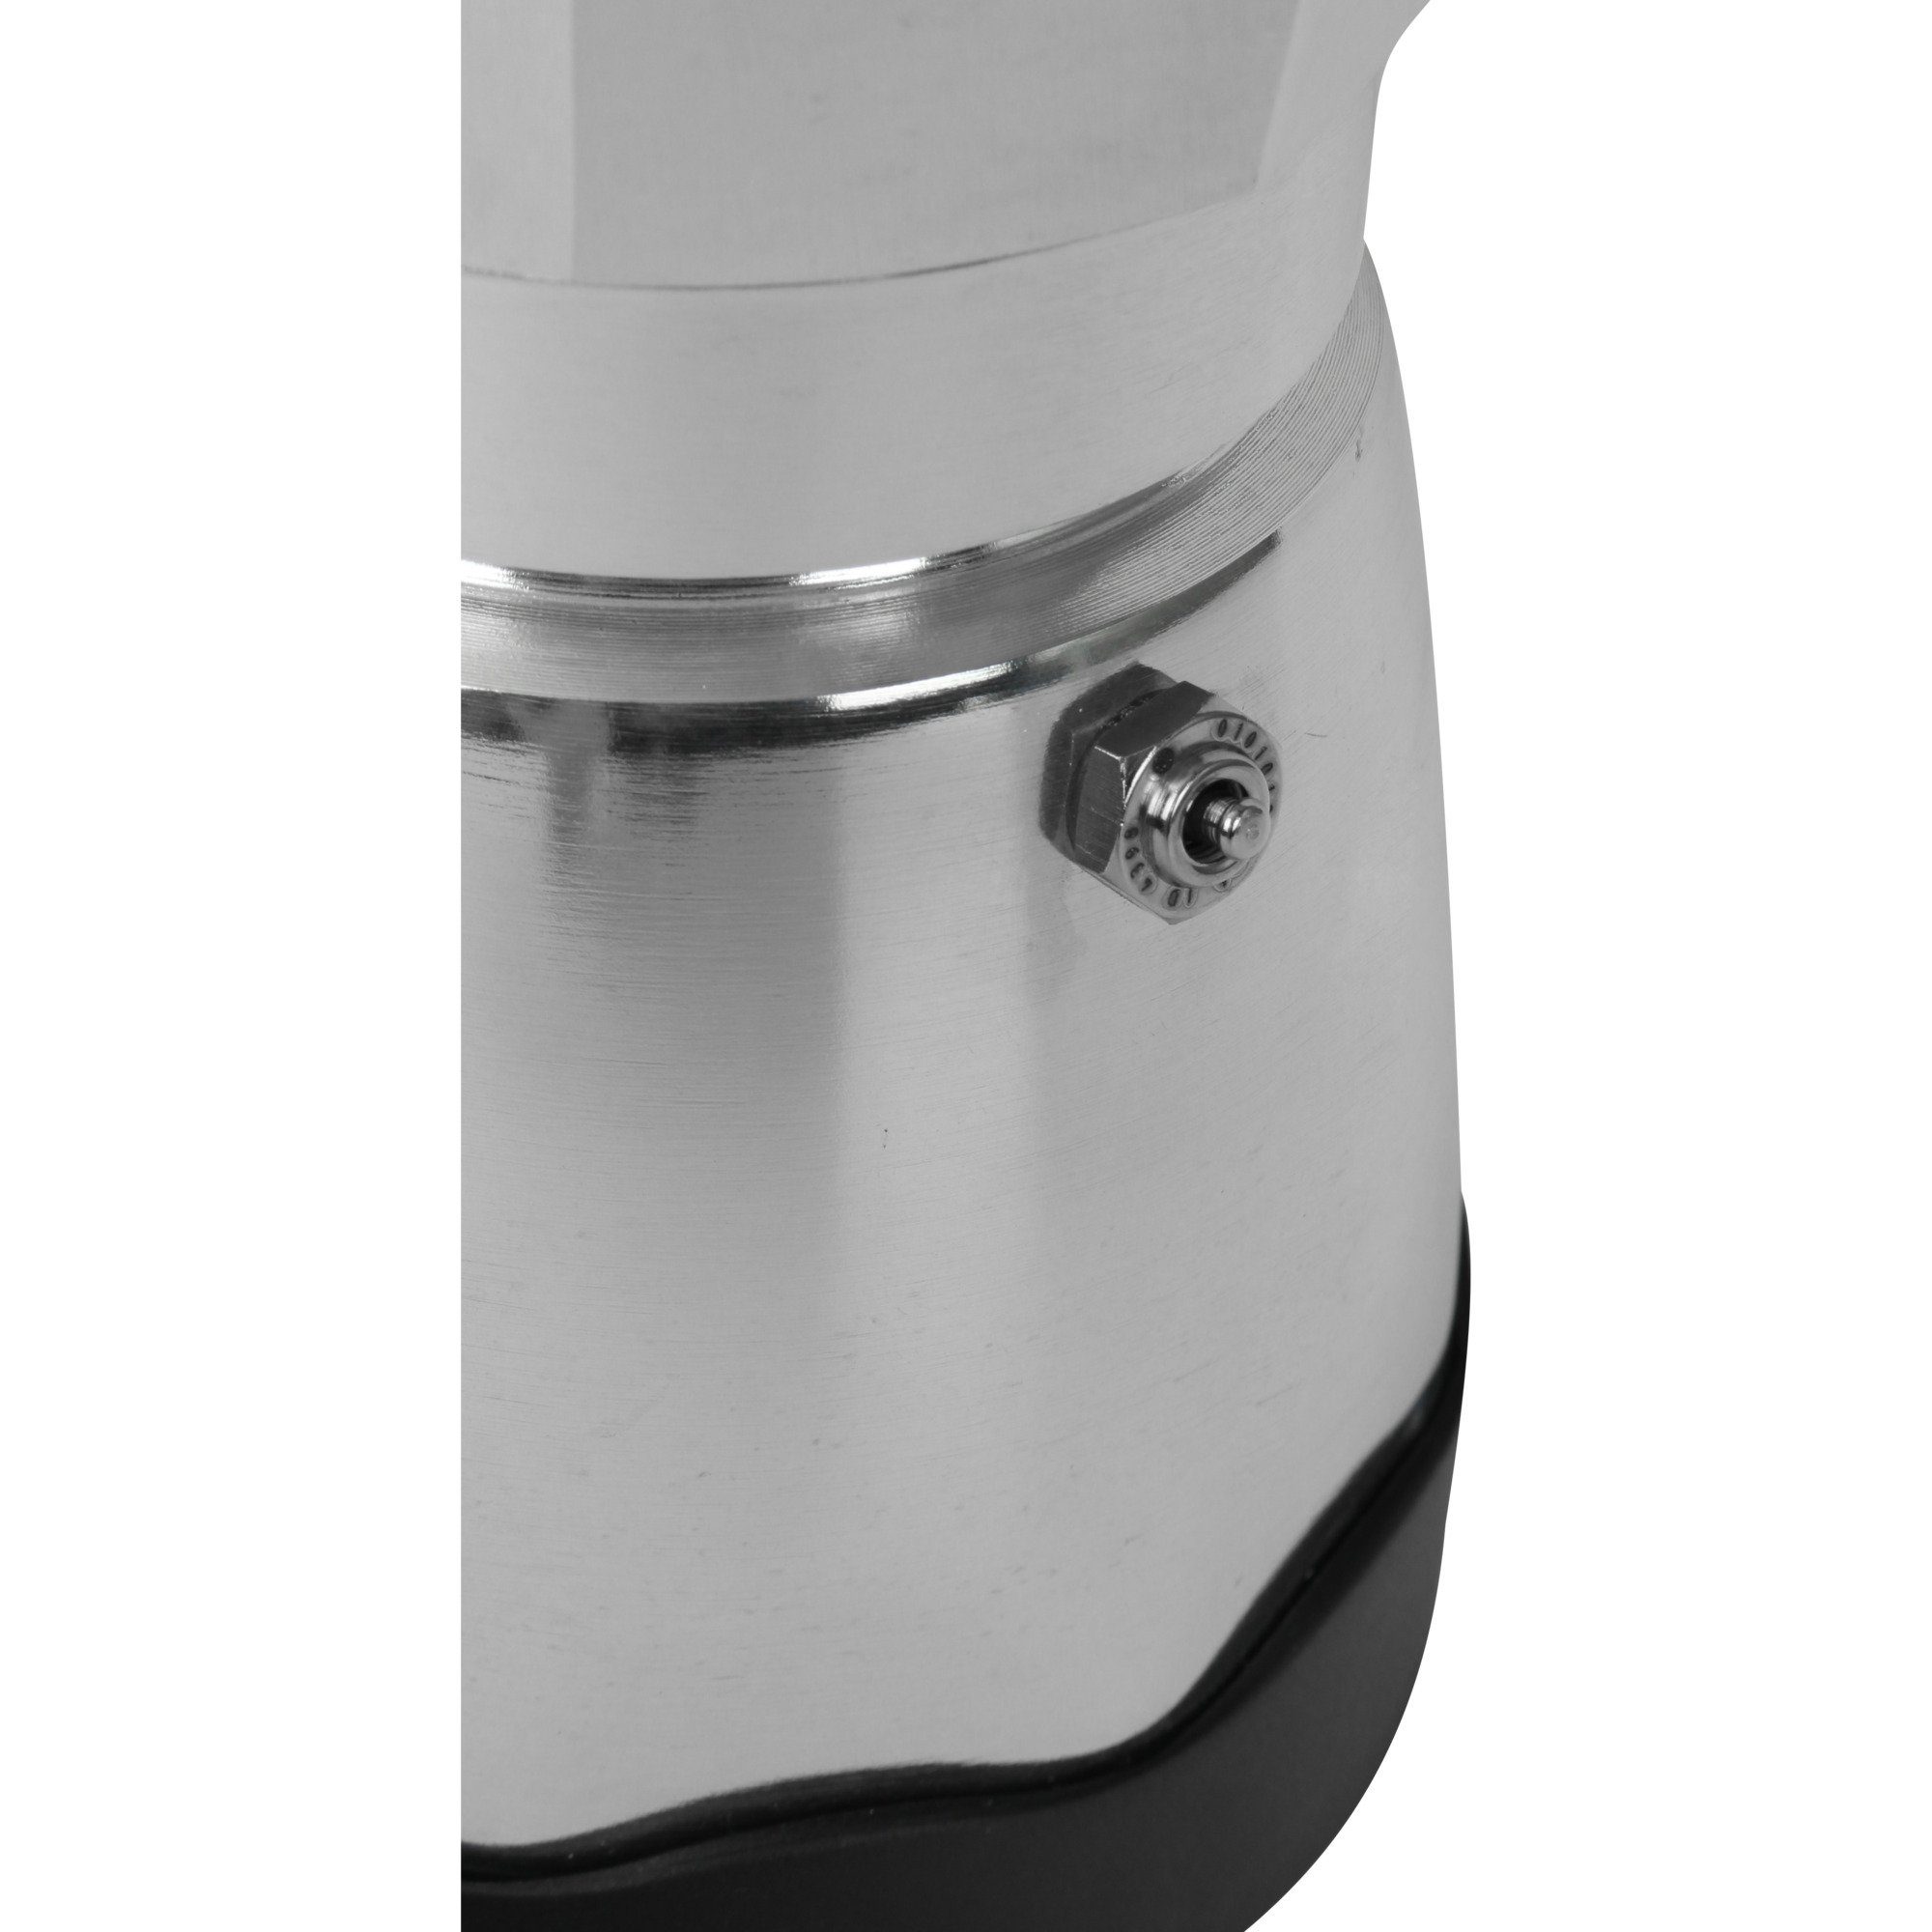 Bialetti Timer, Espressomaschine, (6 Kaffeebereiter Tassen) Moka BIALETTI